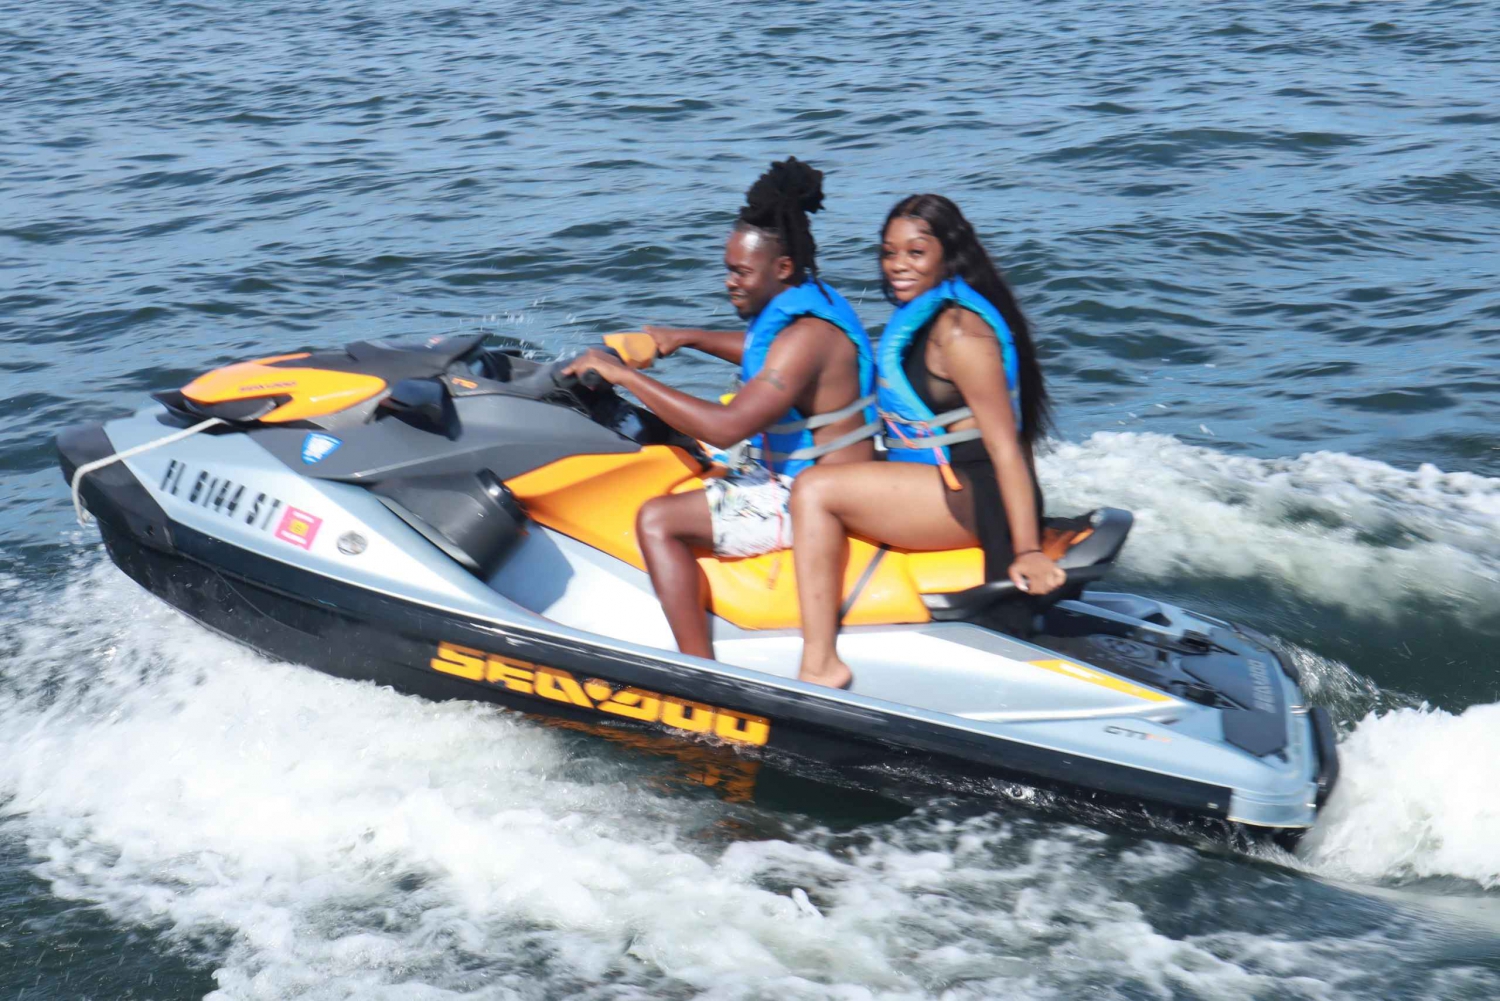 Miami Beach: Boat Ride and Jet Ski Rental